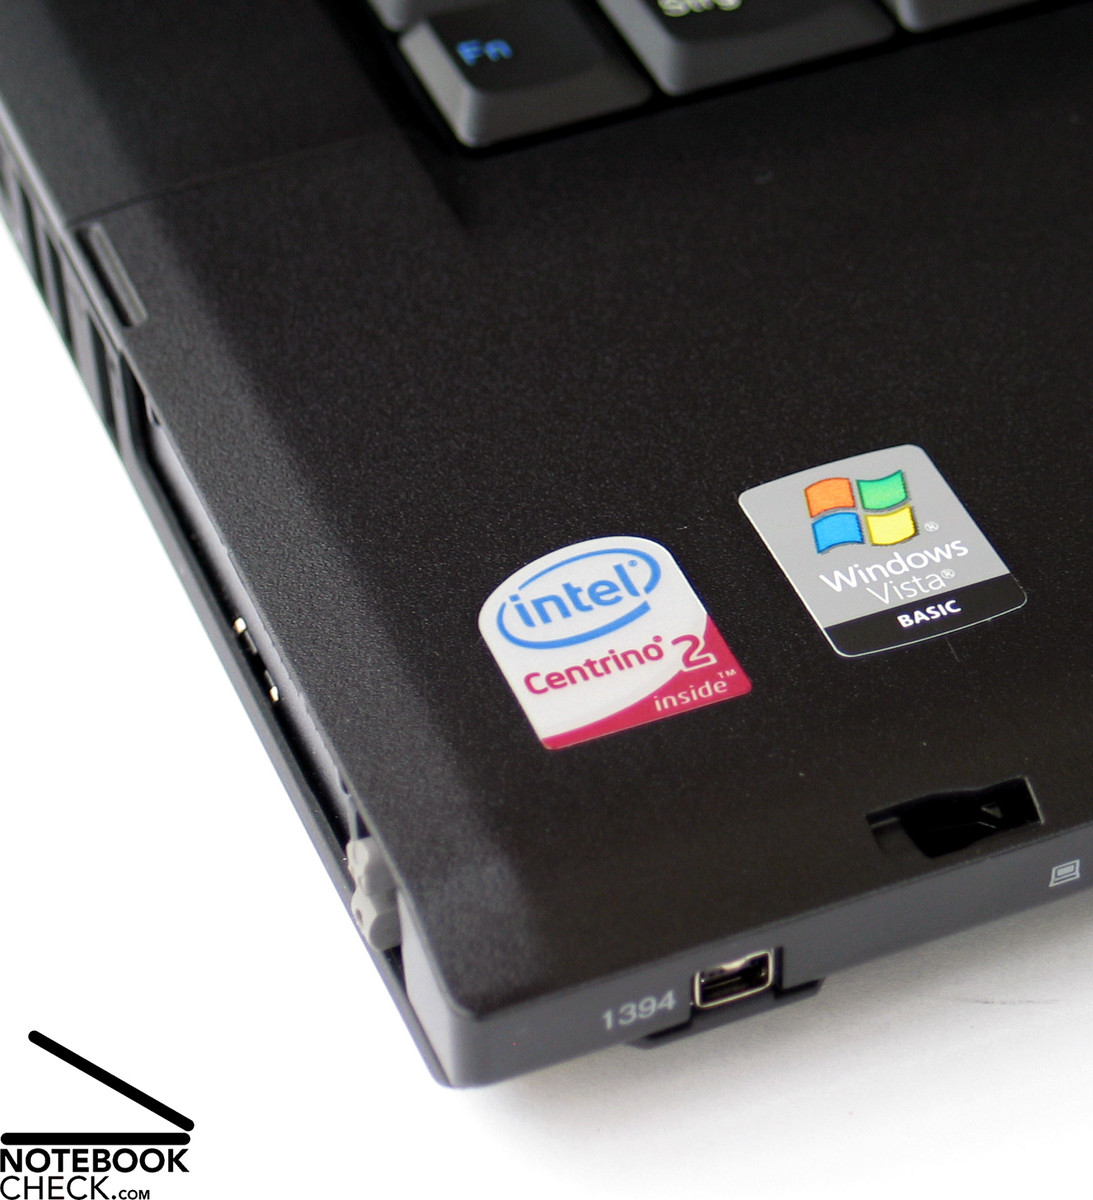 Lenovo t500. Lenovo t420 contactless Card. Intel GMA 4500. Intel gma 4500mhd